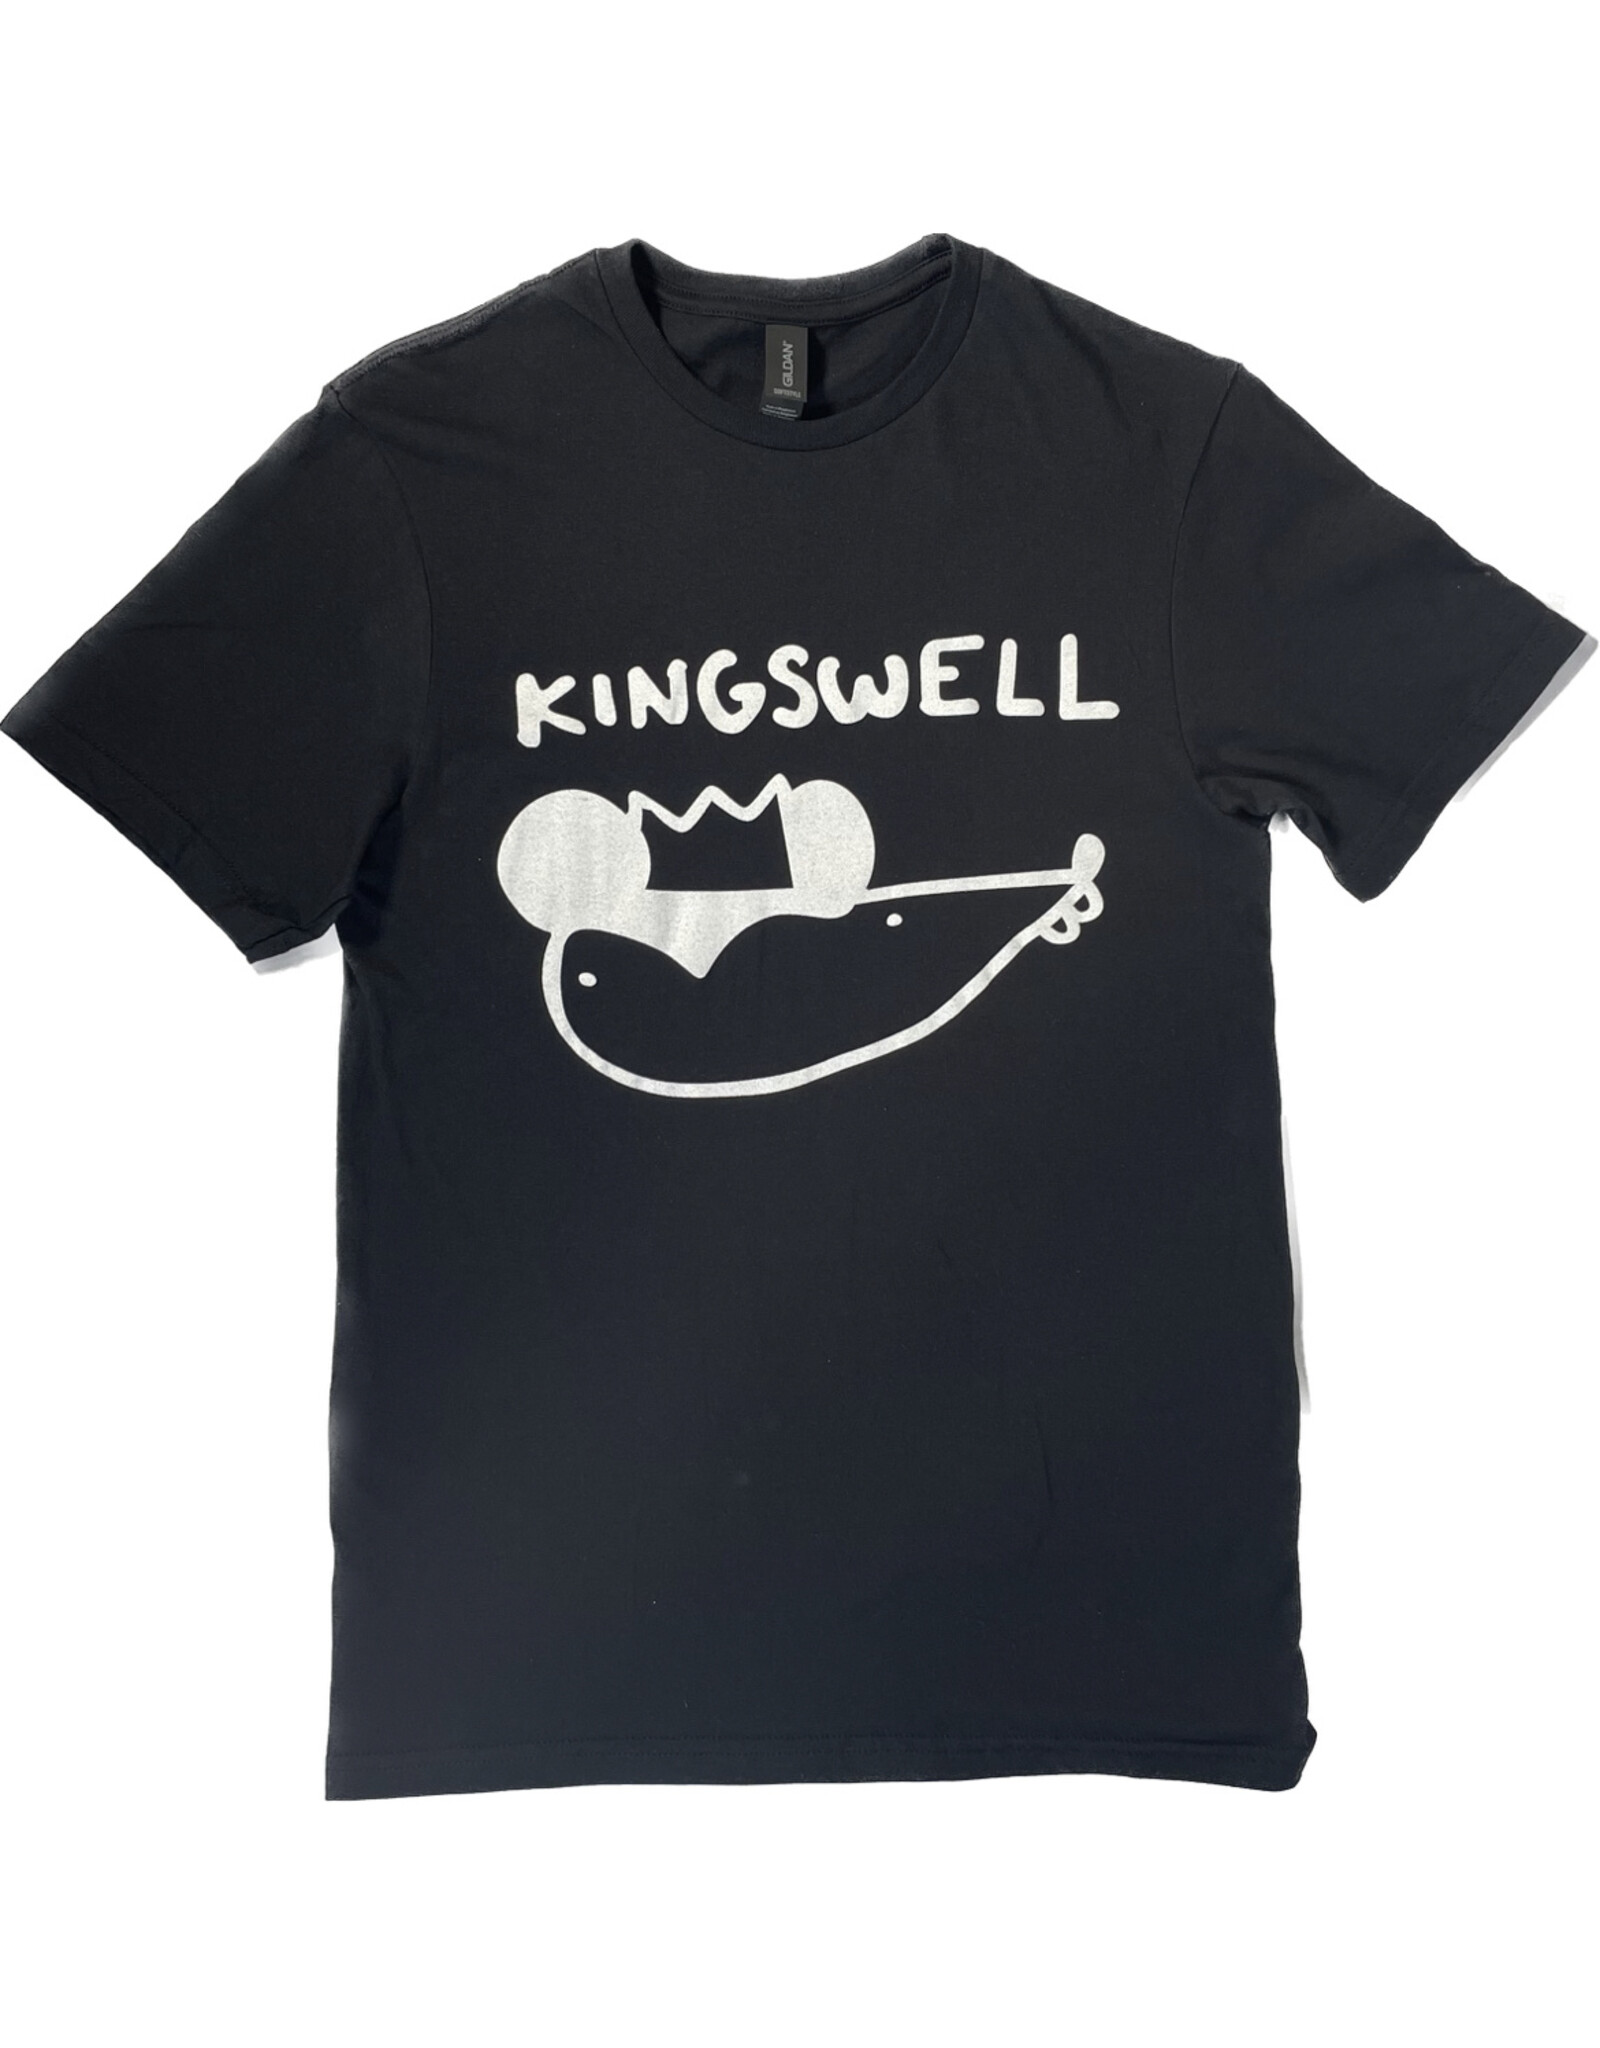 KINGSWELL KINGSWELL ANALOG TEE - BLACK